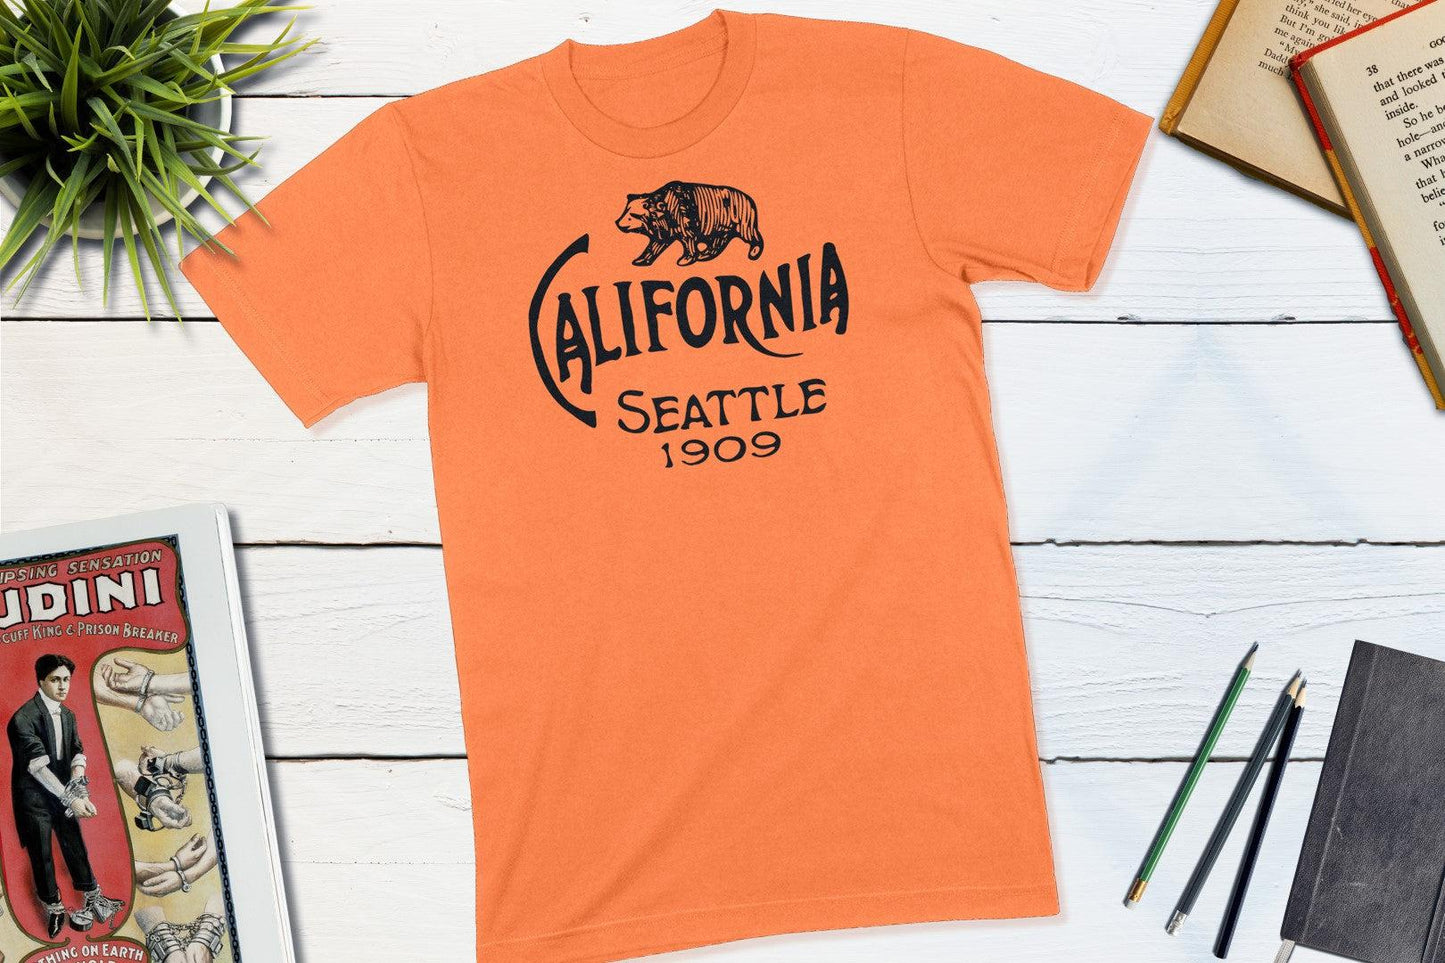 California - Alaska–Yukon–Pacific Exposition of 1909 from Seattle Washington Shirt-Unisex T-shirt-Yesteeyear